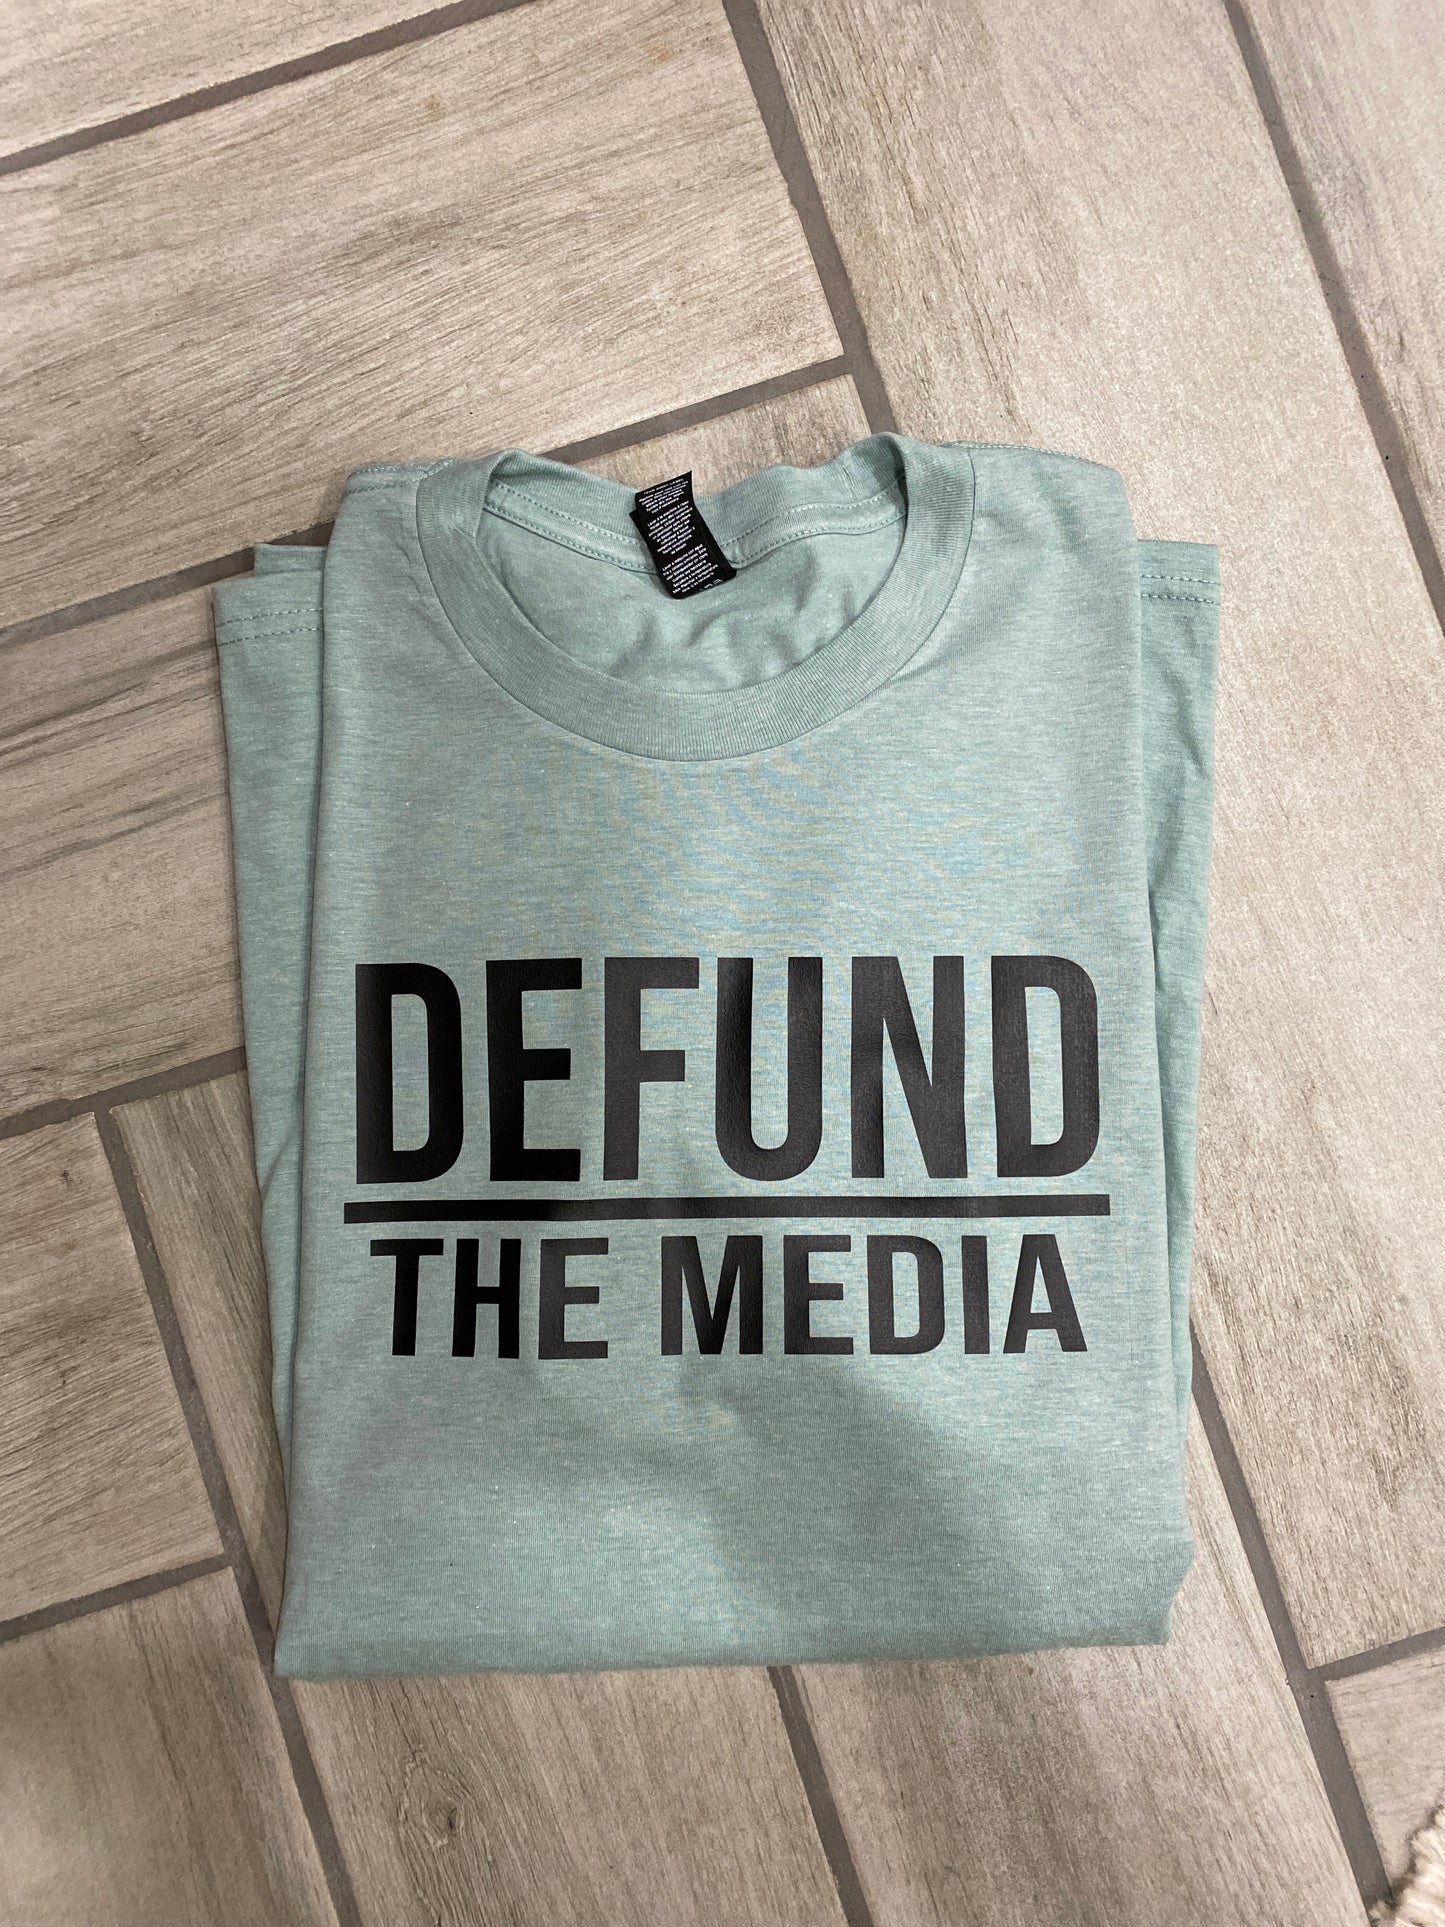 Defund the media T-shirt